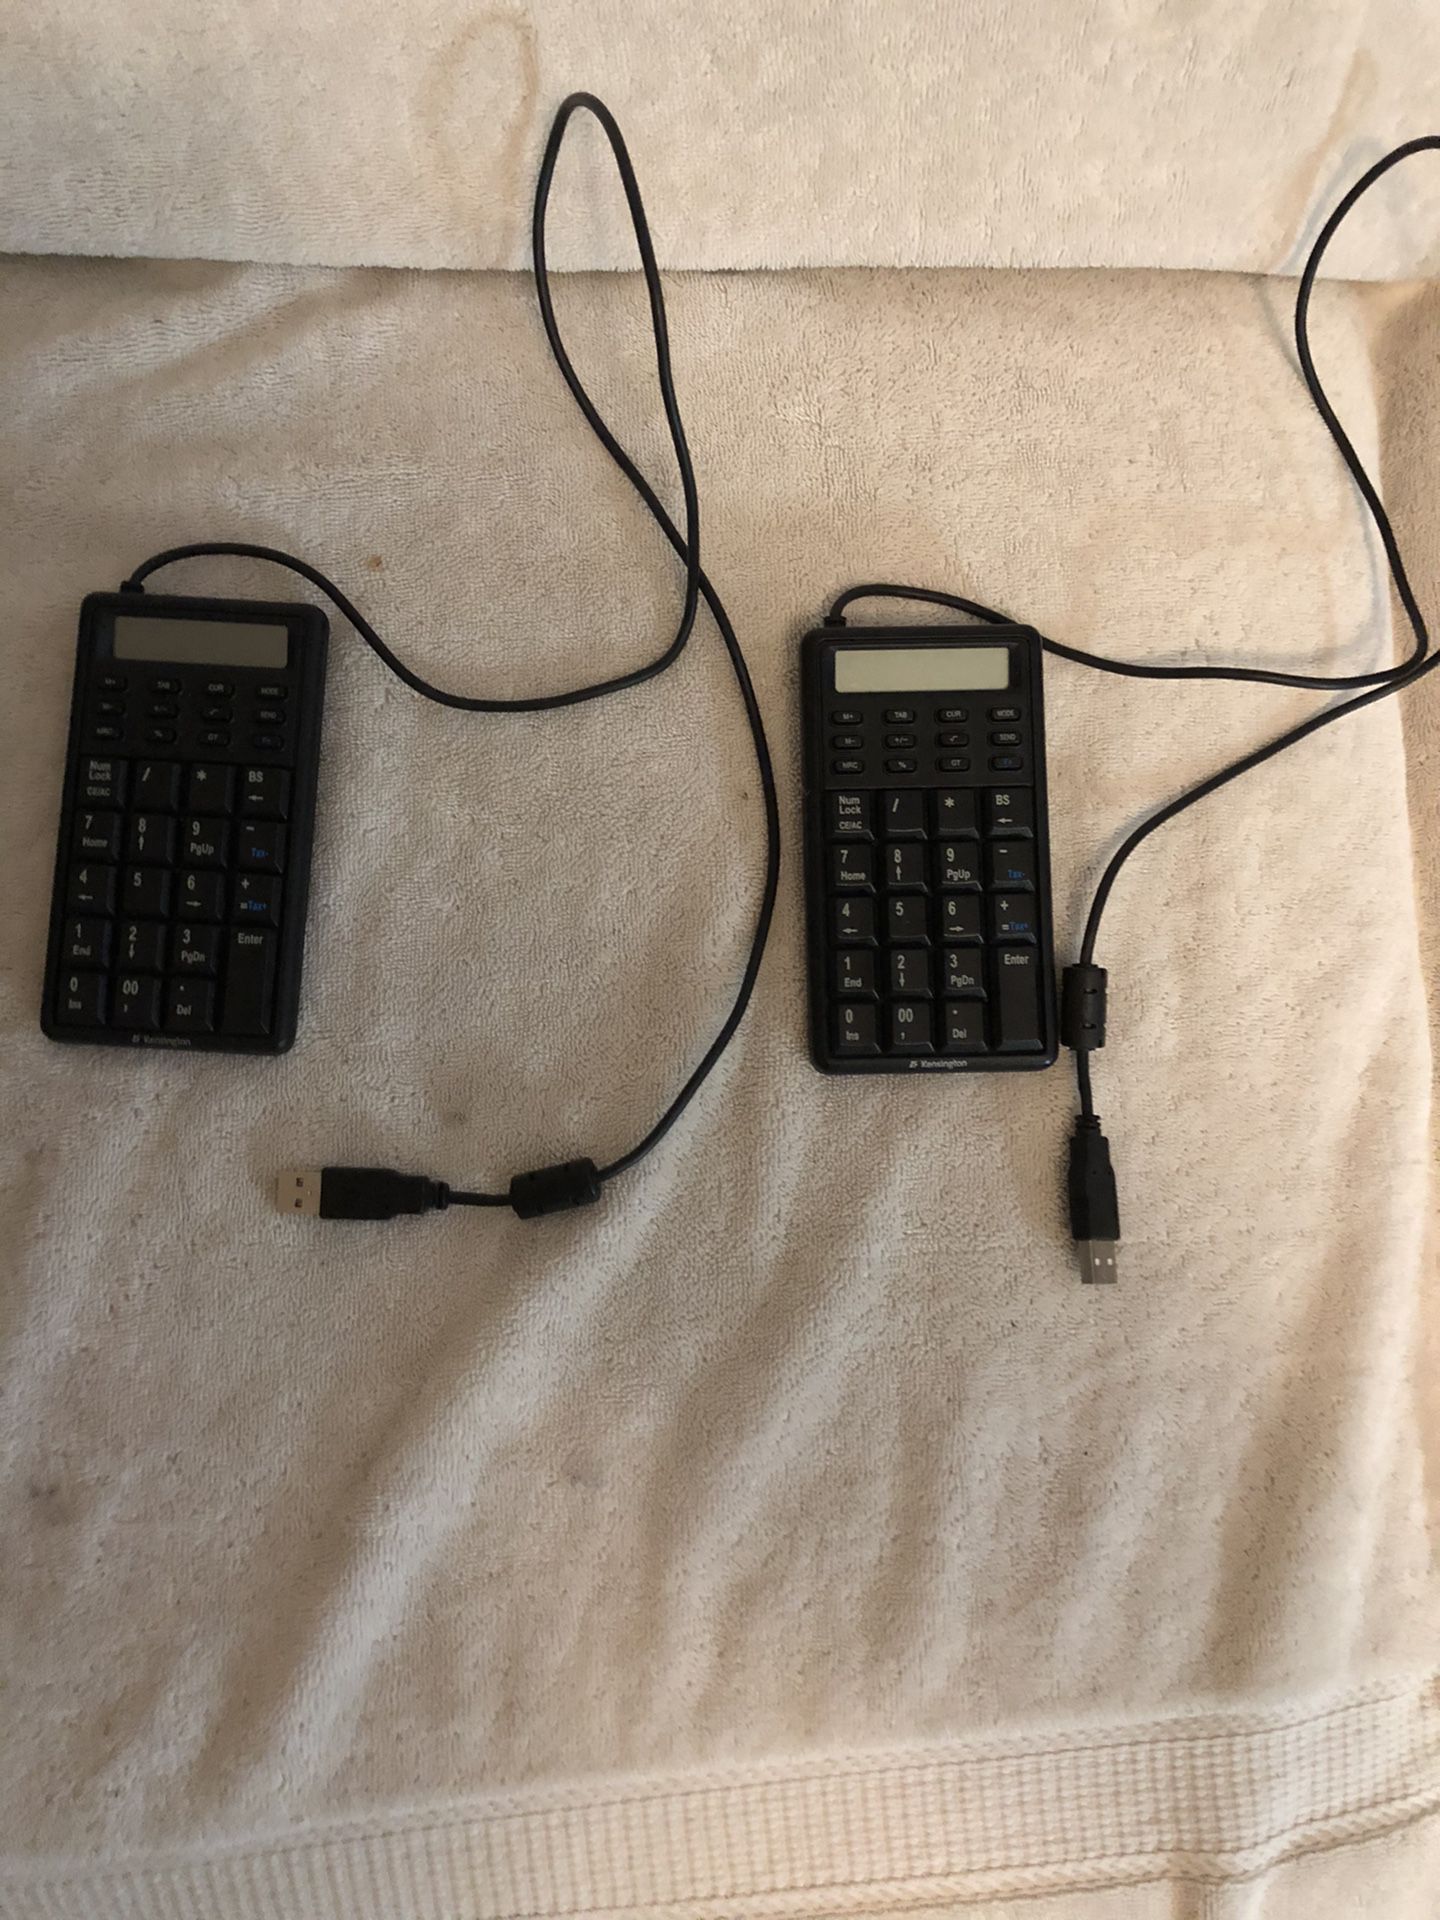 2 Kensington Notebook Keypad/Calculator Wired Keyboard With USB Hub